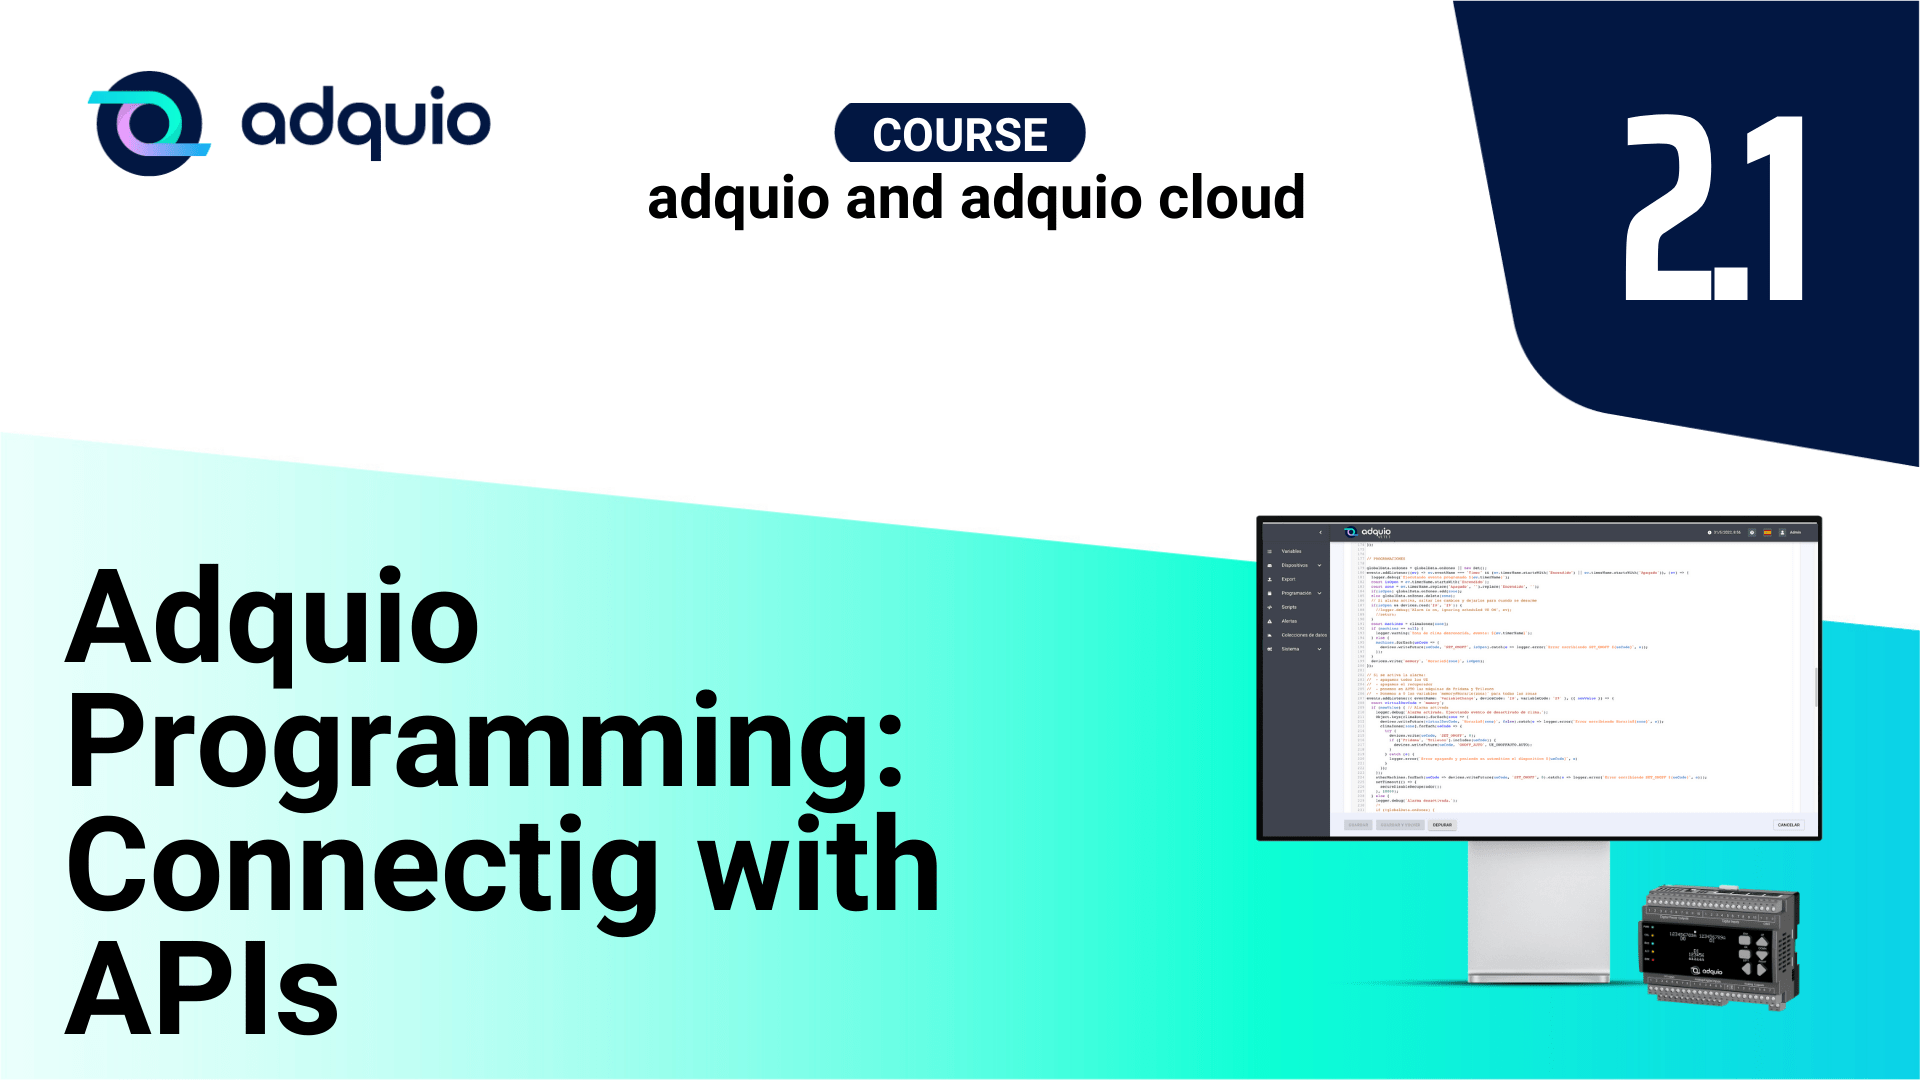 Adquio programming: Connecting with APIs